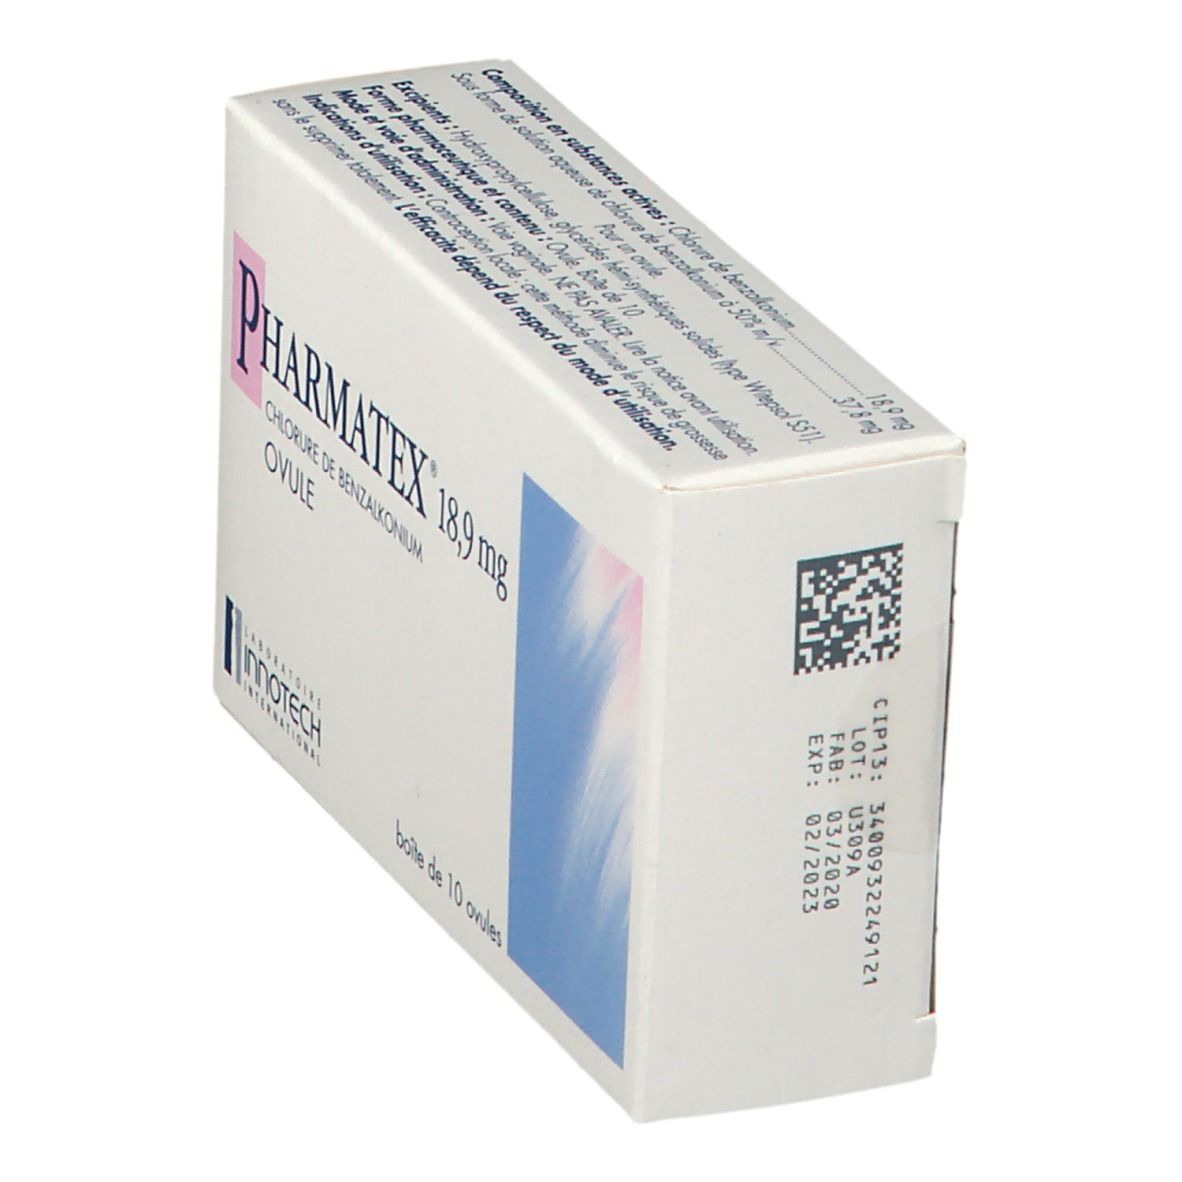 Pharmatex® 18,9 mg